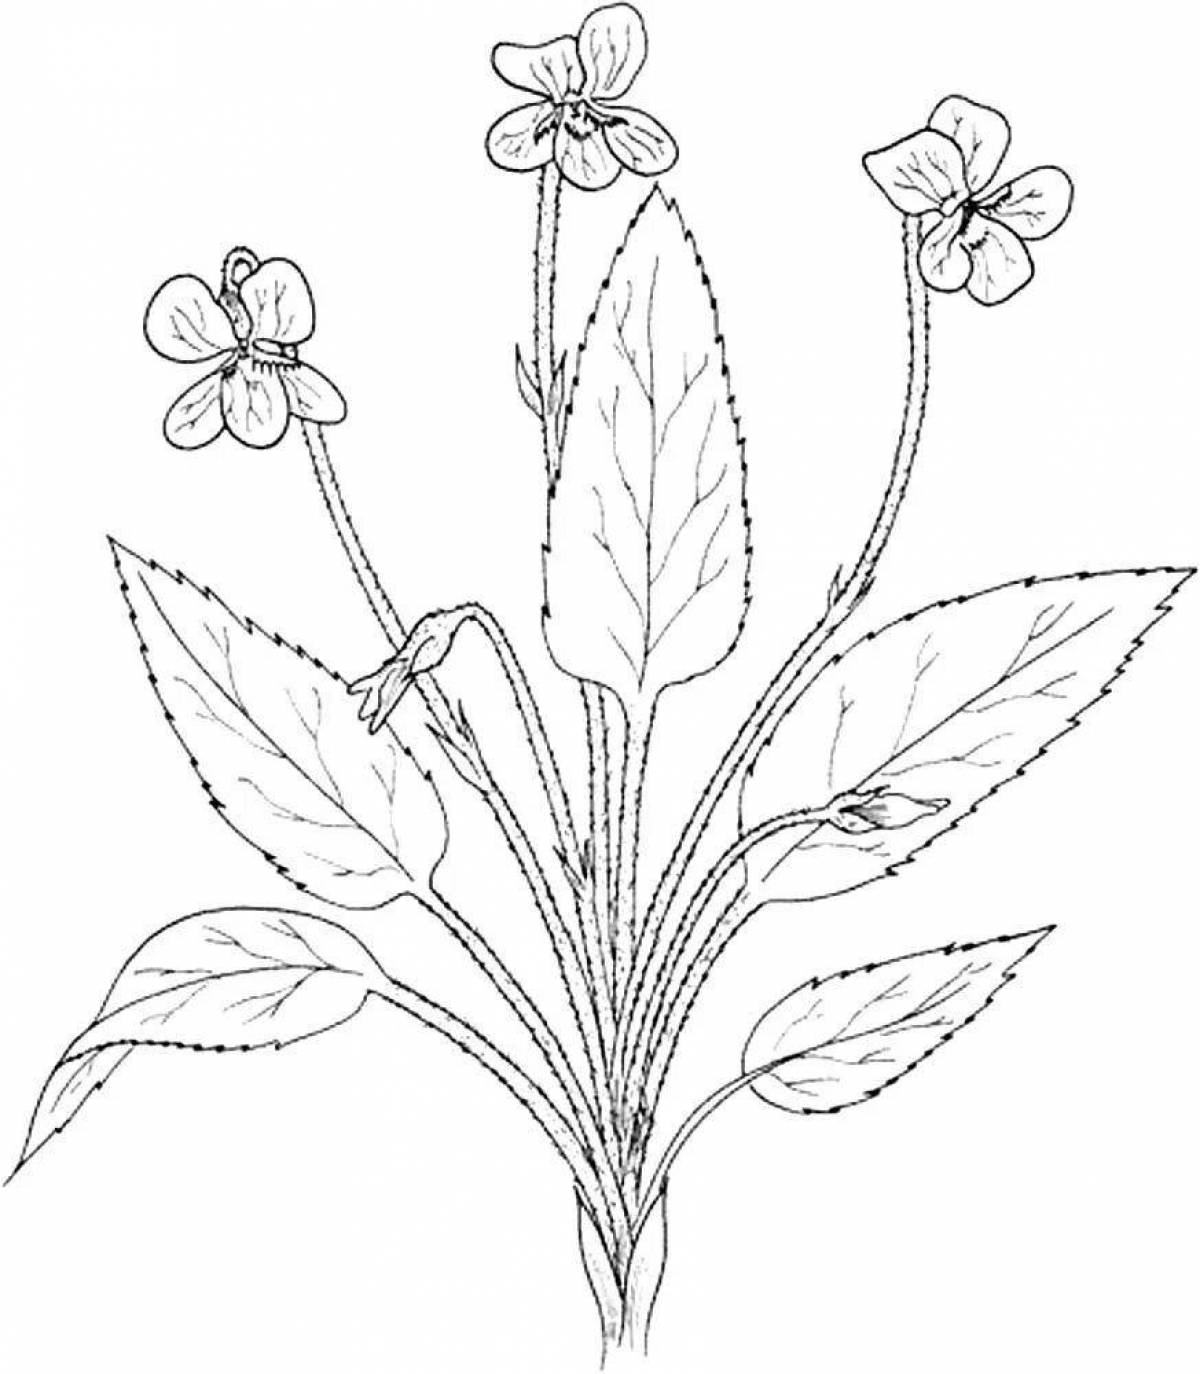 Artistic coloring of medicinal plants